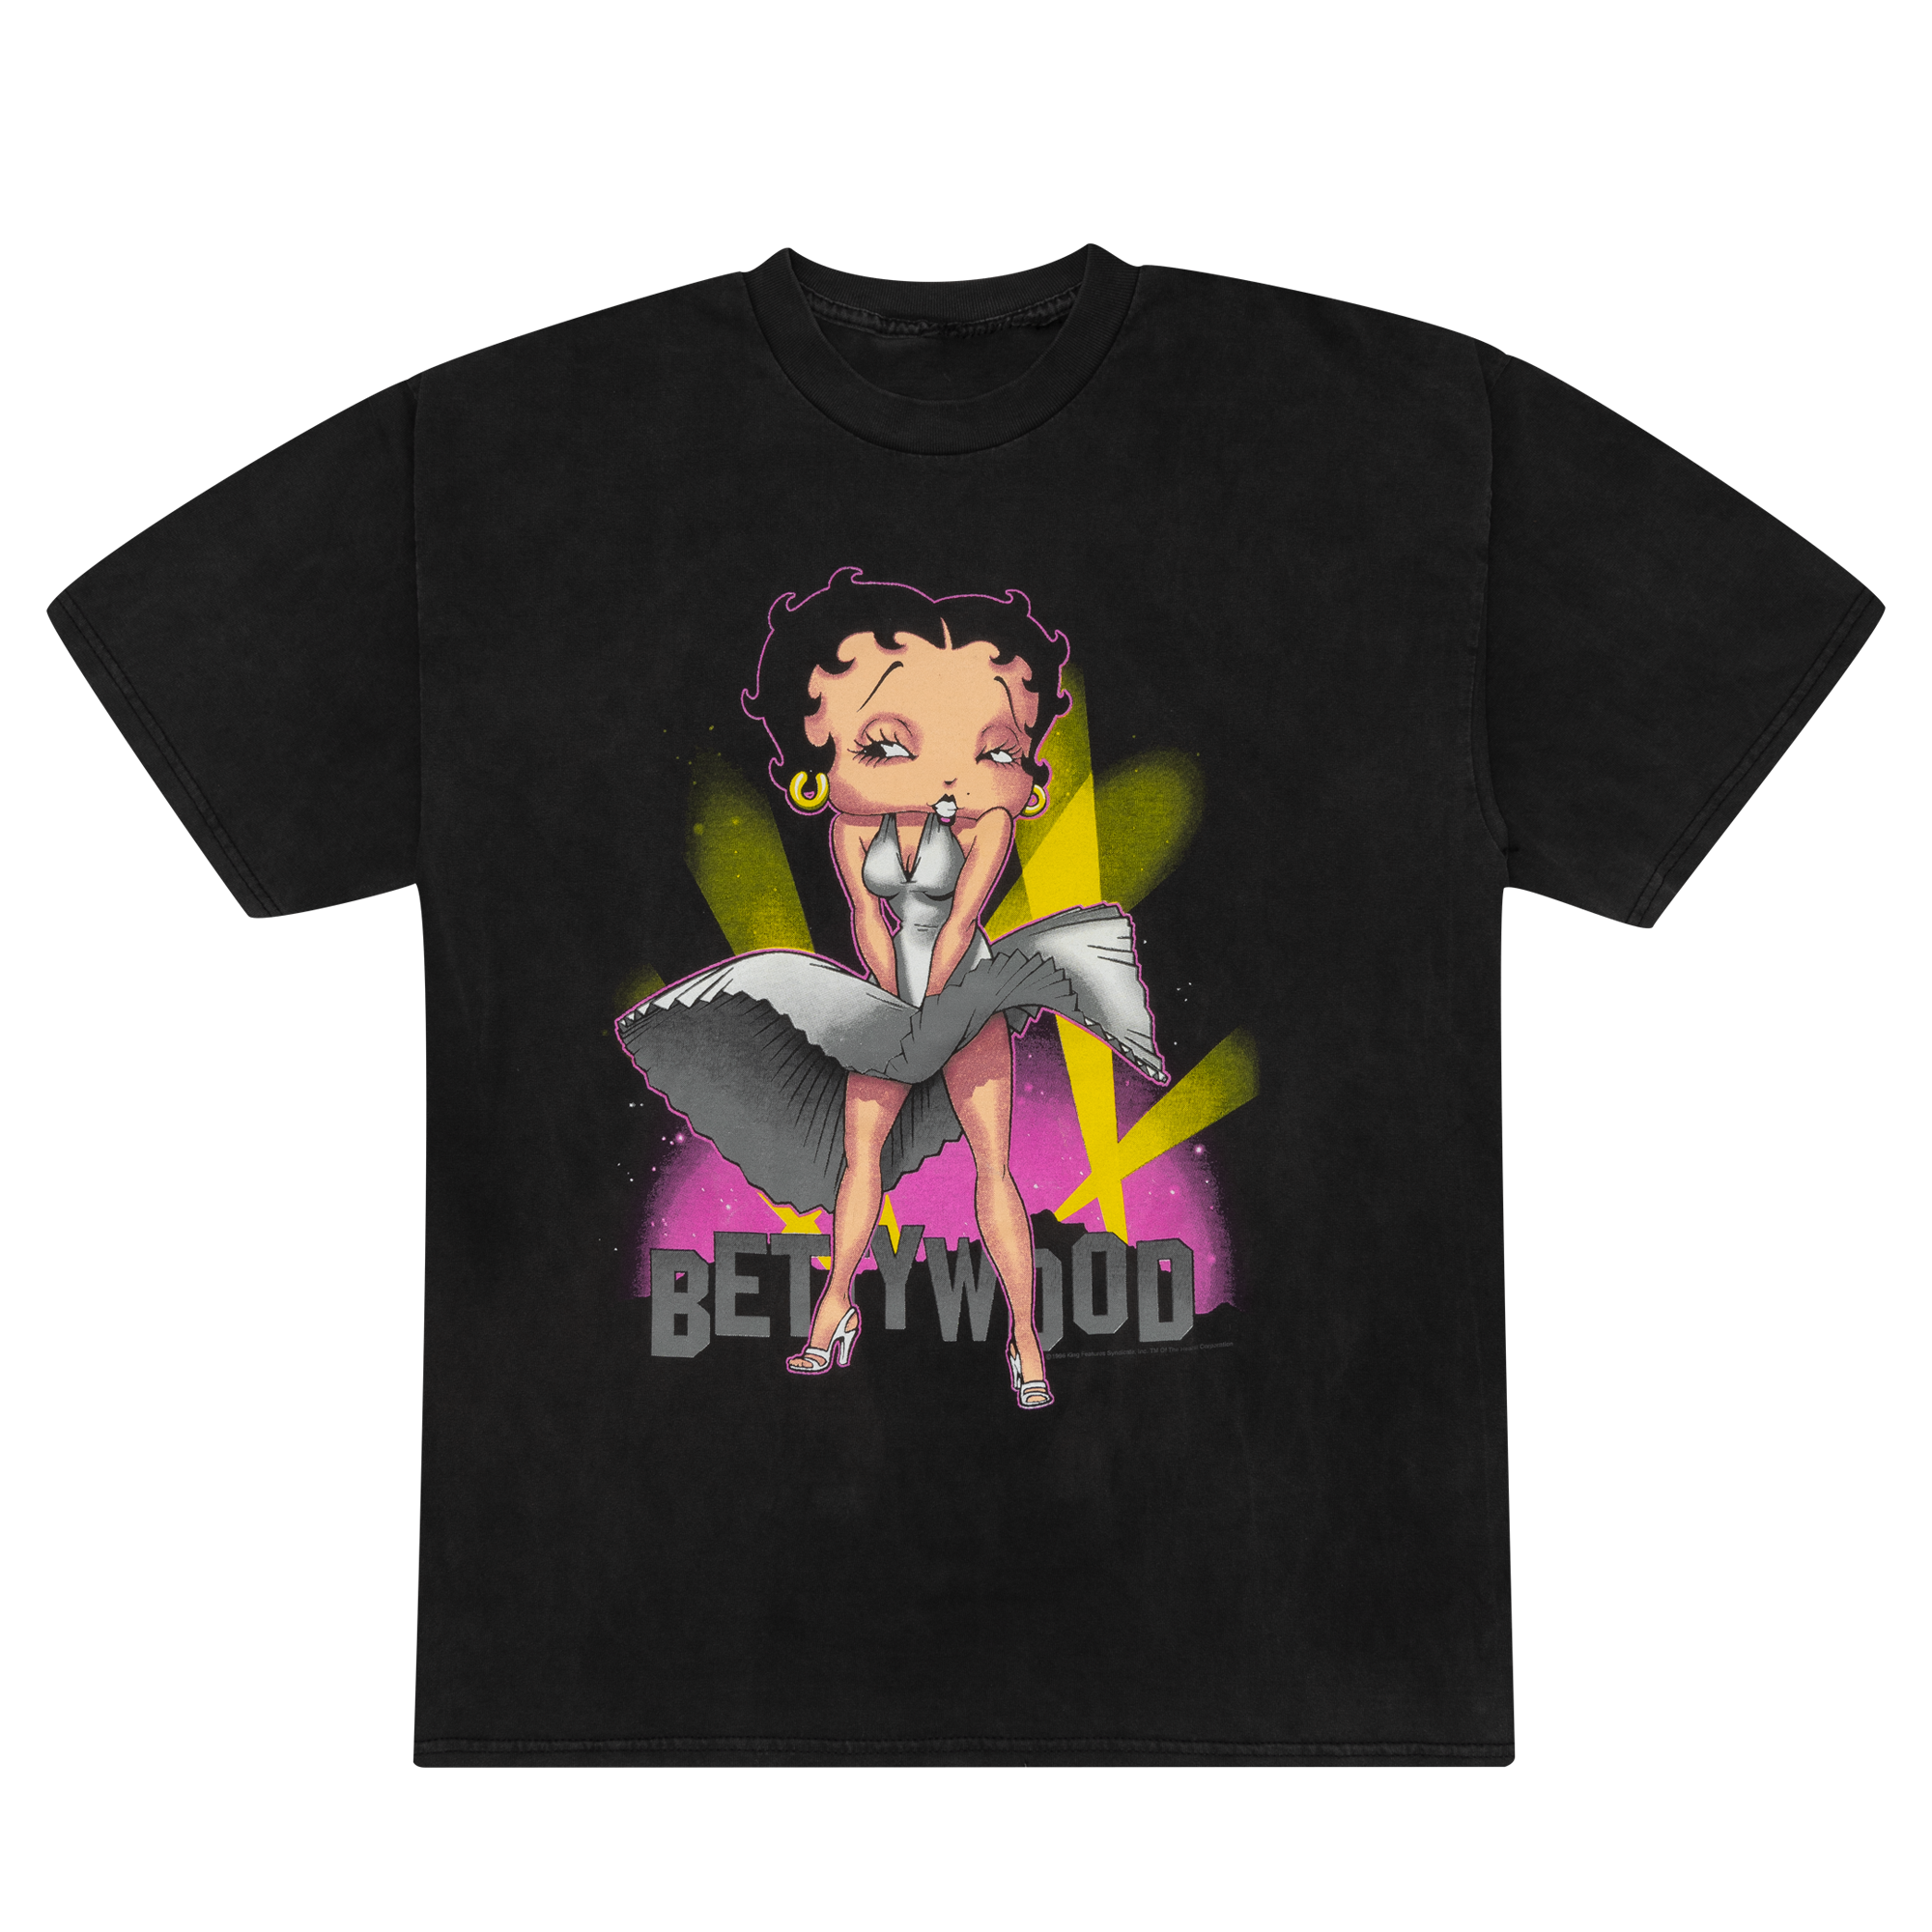 Betty Boop 1996 "Bettywood" Faded Tee Black-PLUS